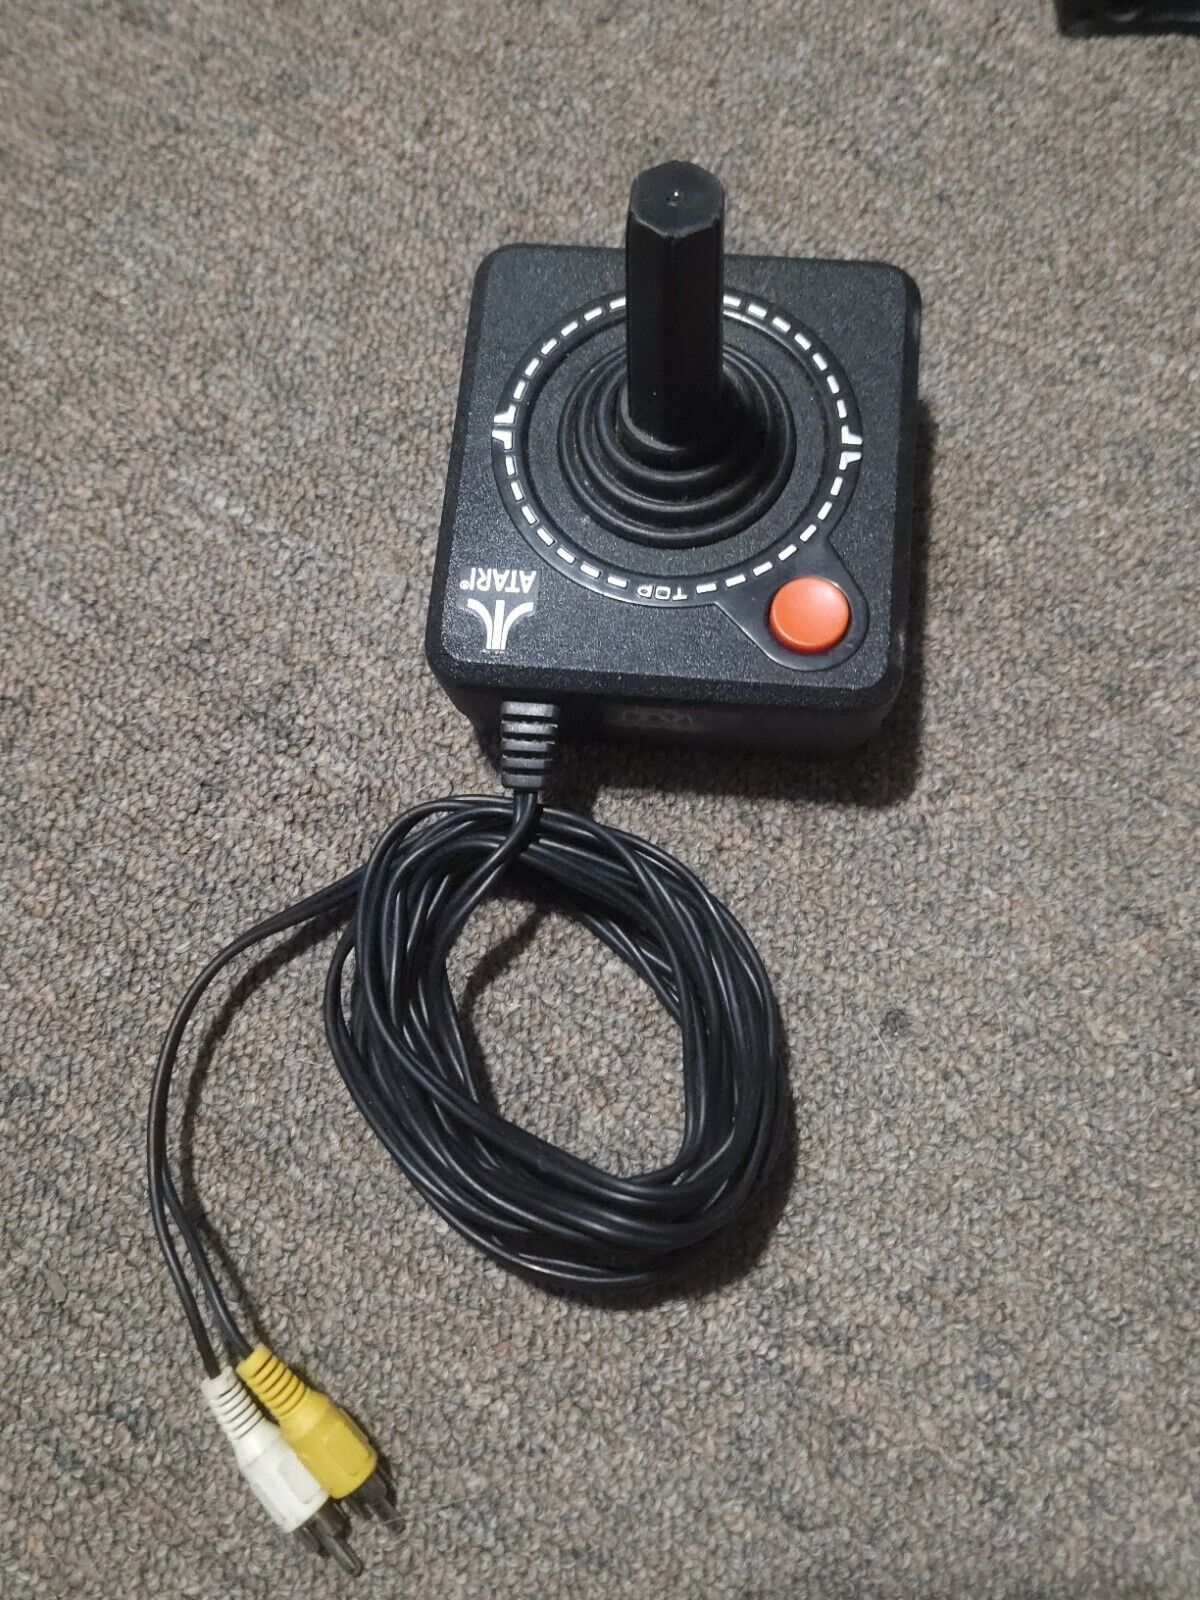 Atari 2600 Game Controller Joystick Red Button Original Style TV Games Video Atari